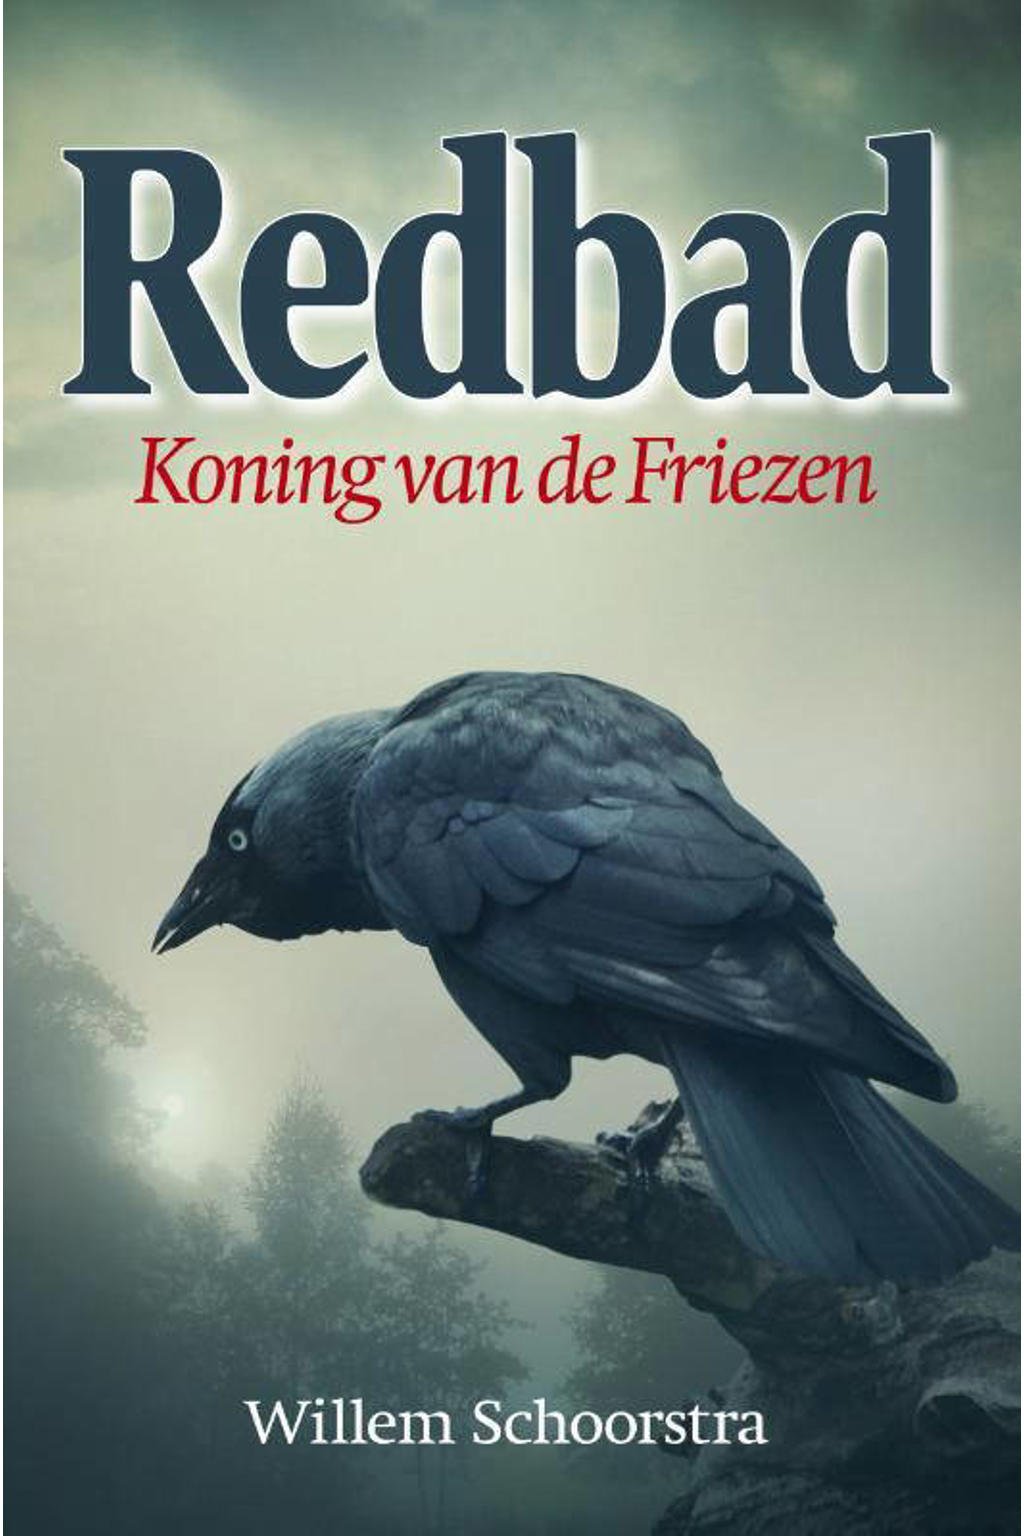 Redbad - Willem Schoorstra